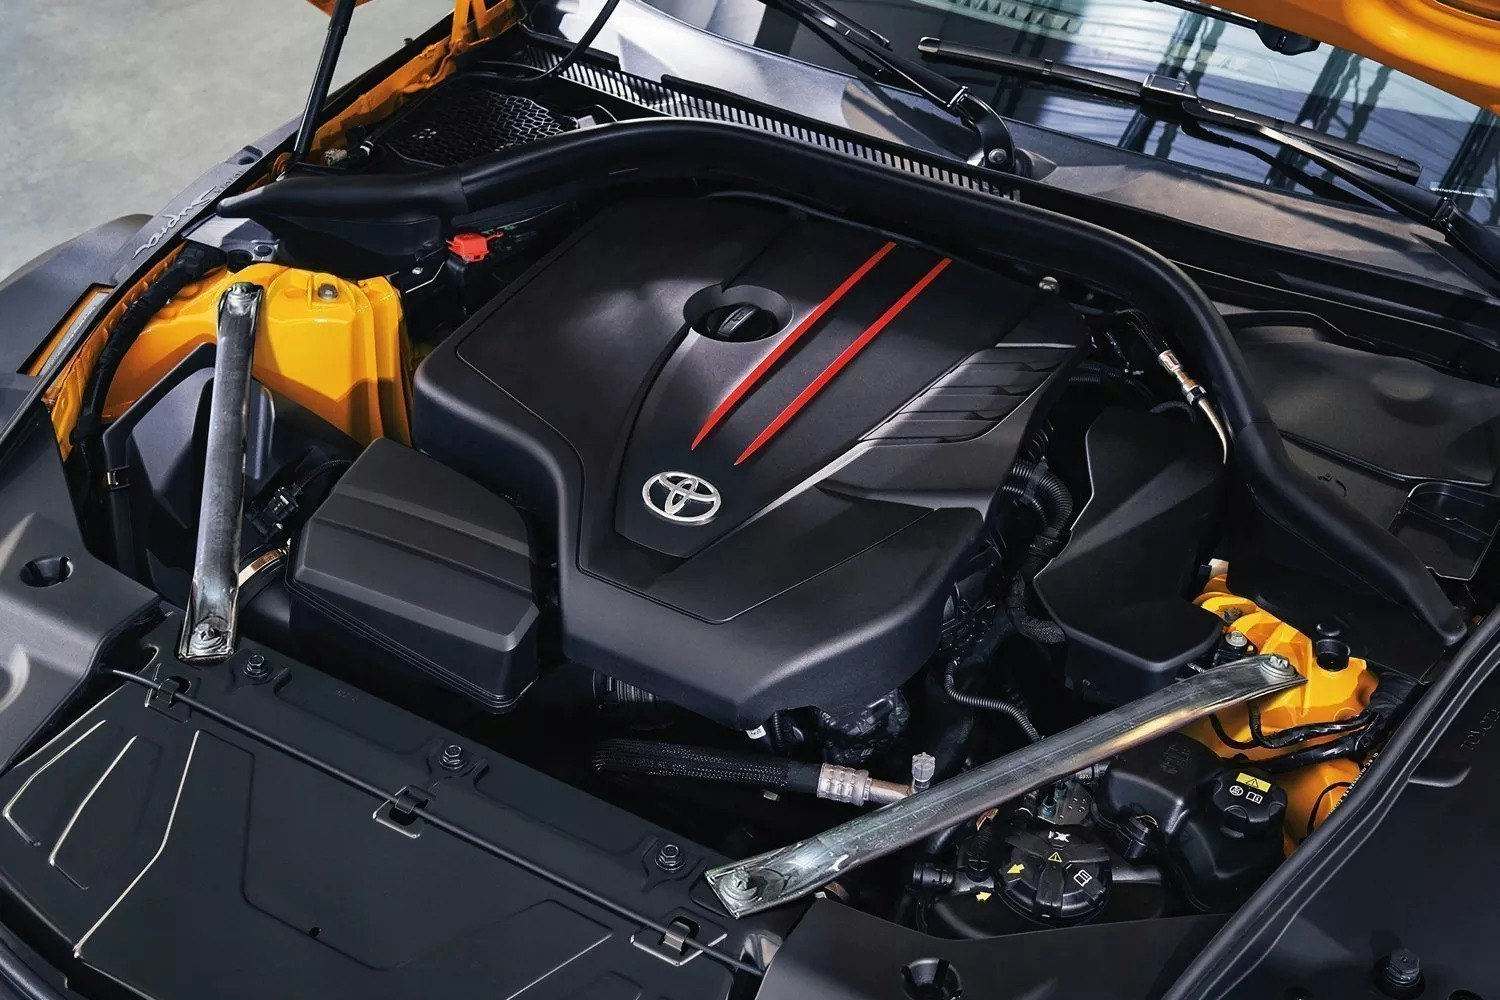 Toyota hood up exposing its engine